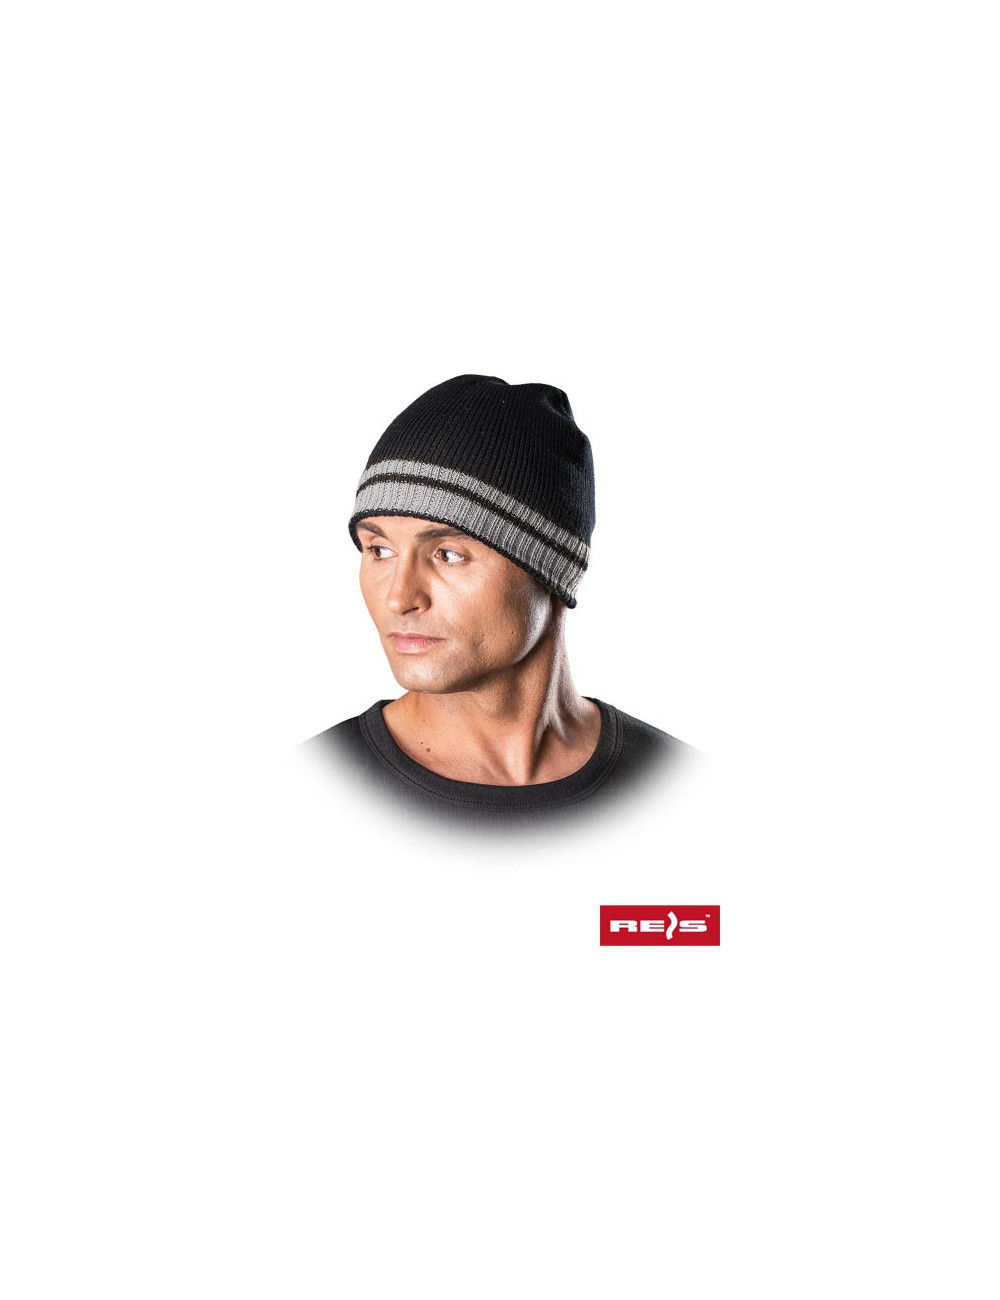 Protective insulated hat czpas bjs black-light gray Reis